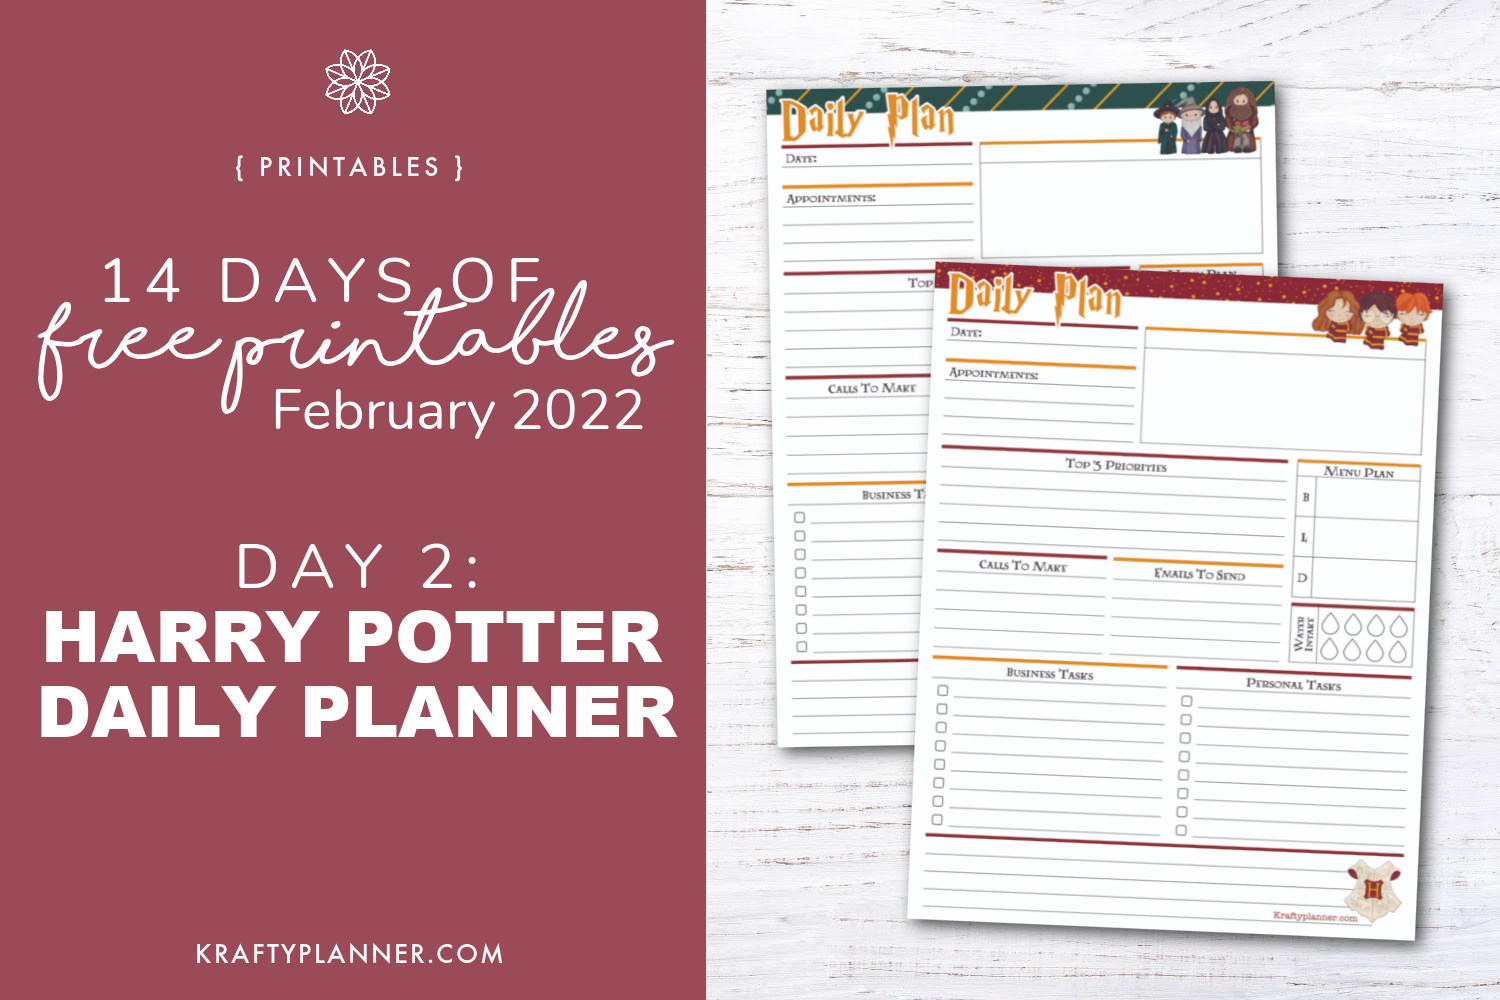 Free Printable Harry Potter Birthday Banner — Krafty Planner